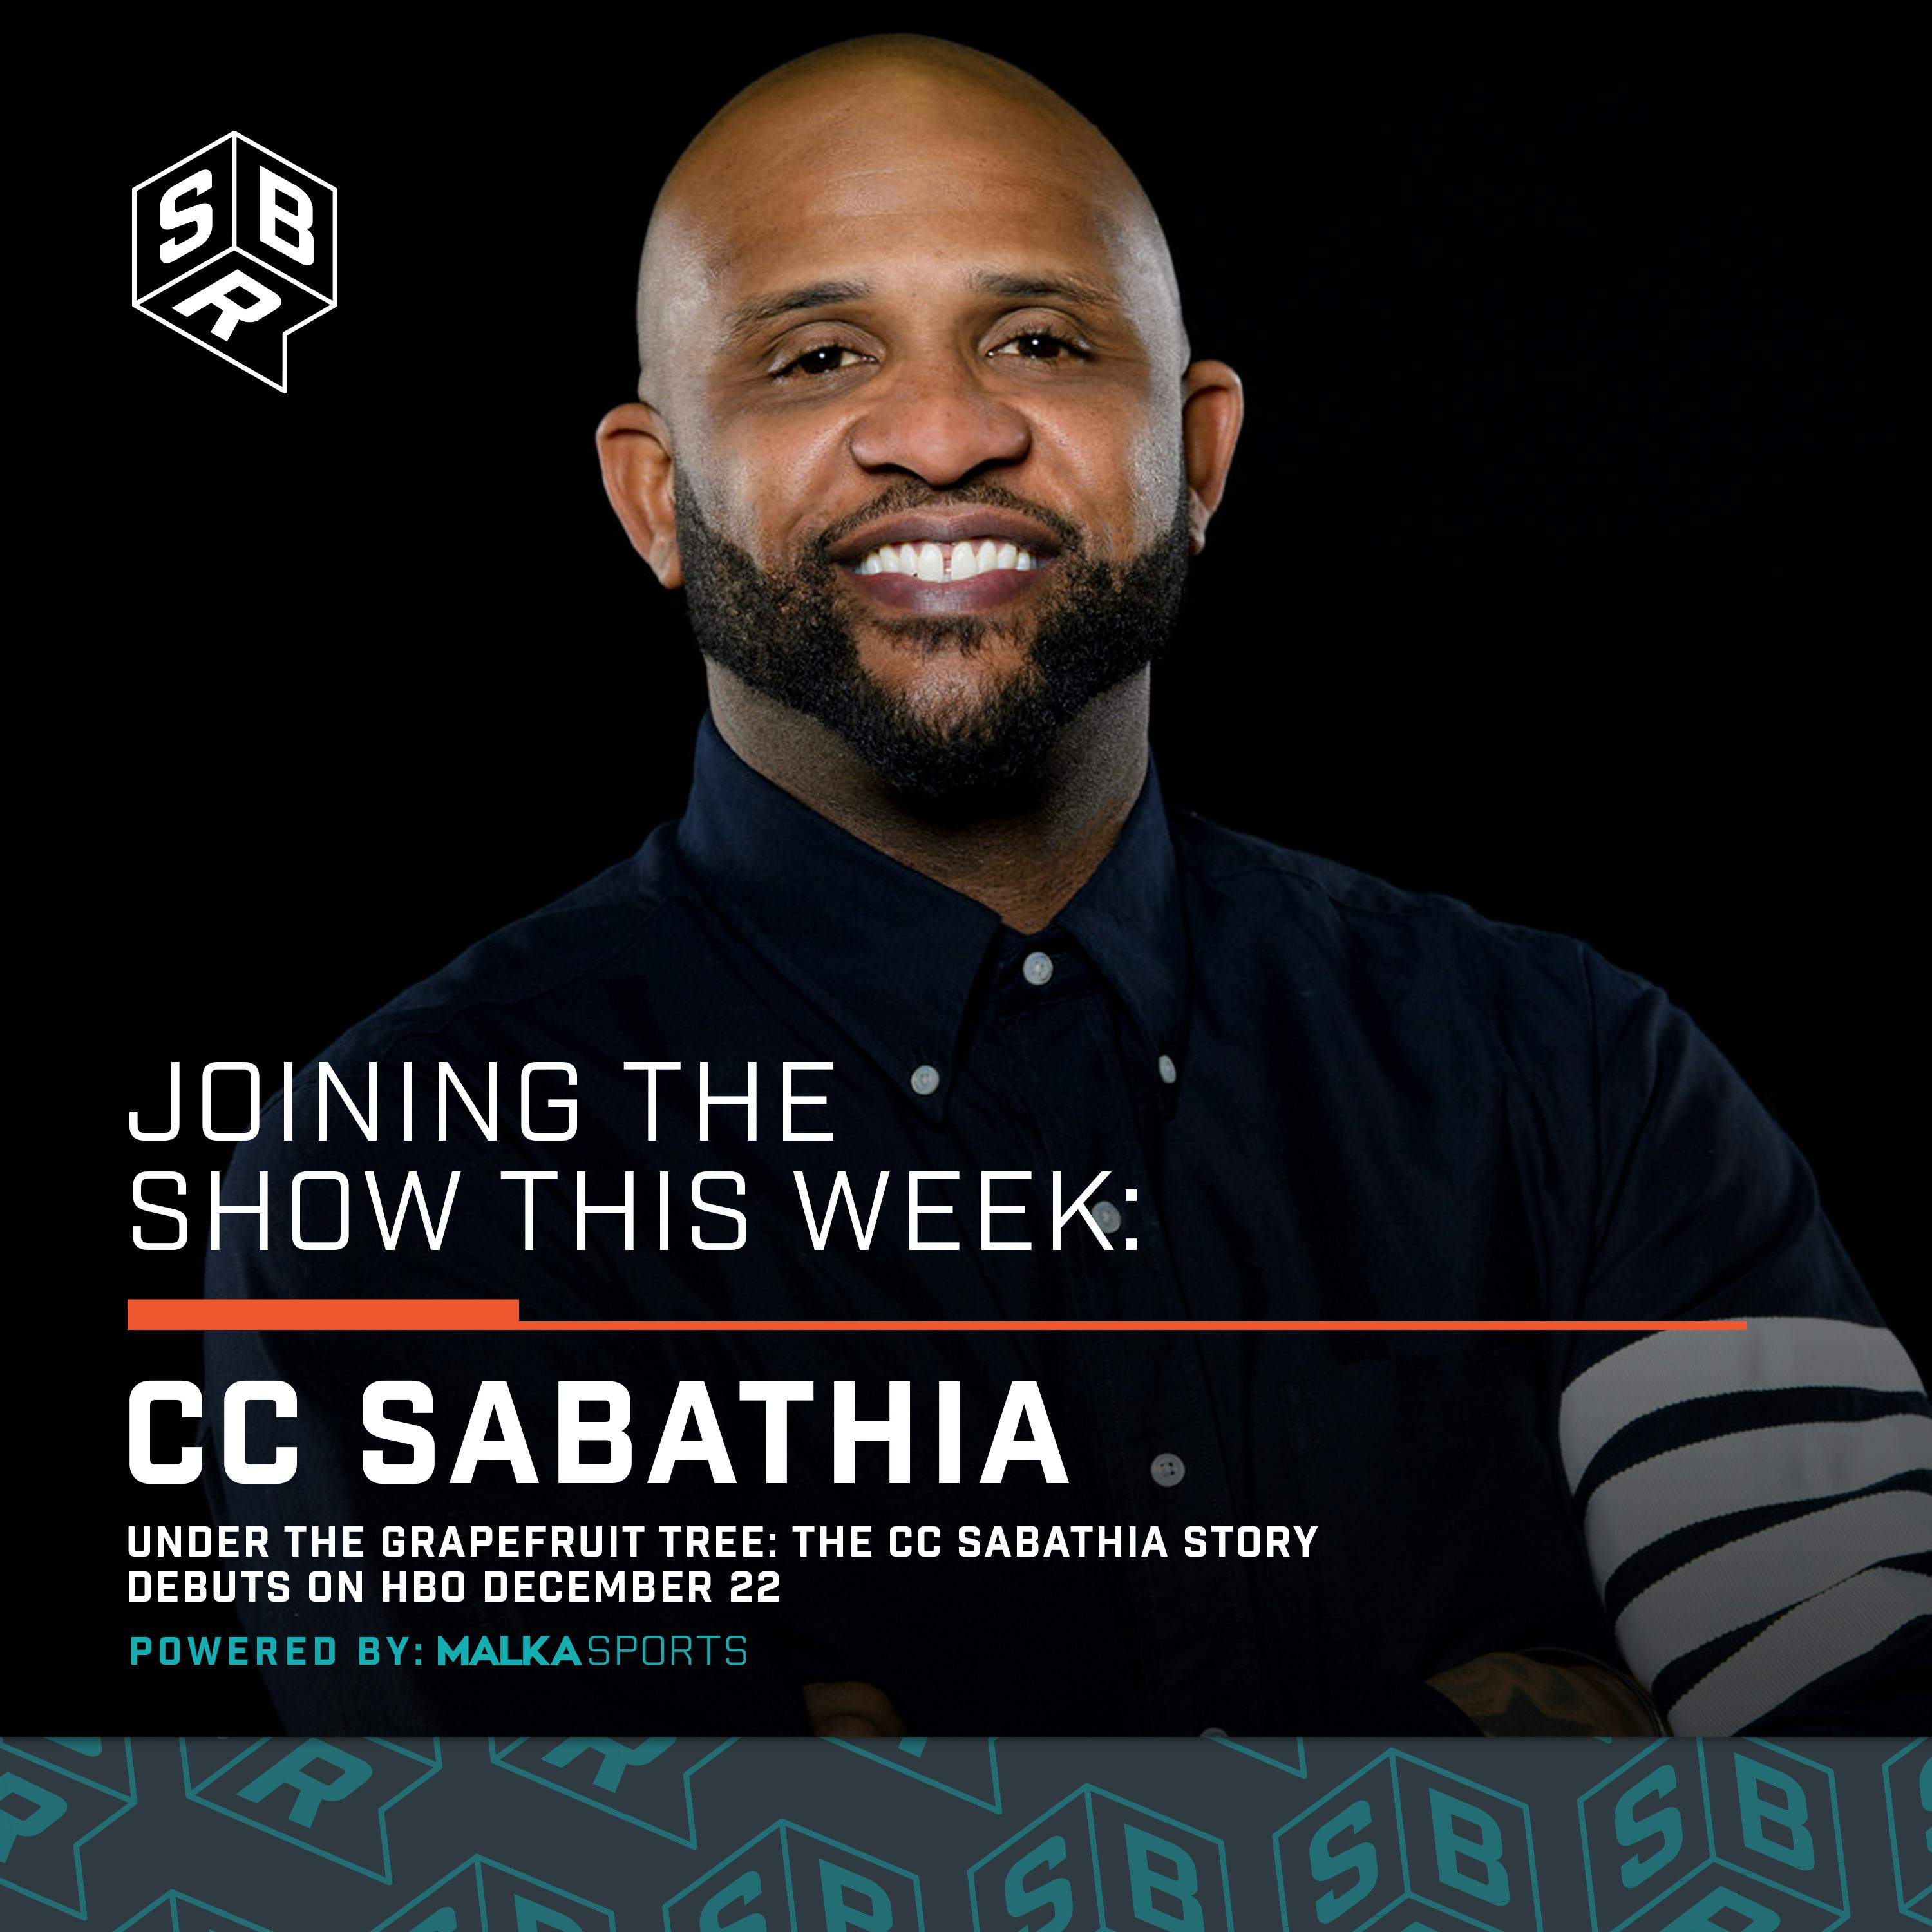 CC Sabathia (@CC_Sabathia) - Former New York Yankees star pitcher